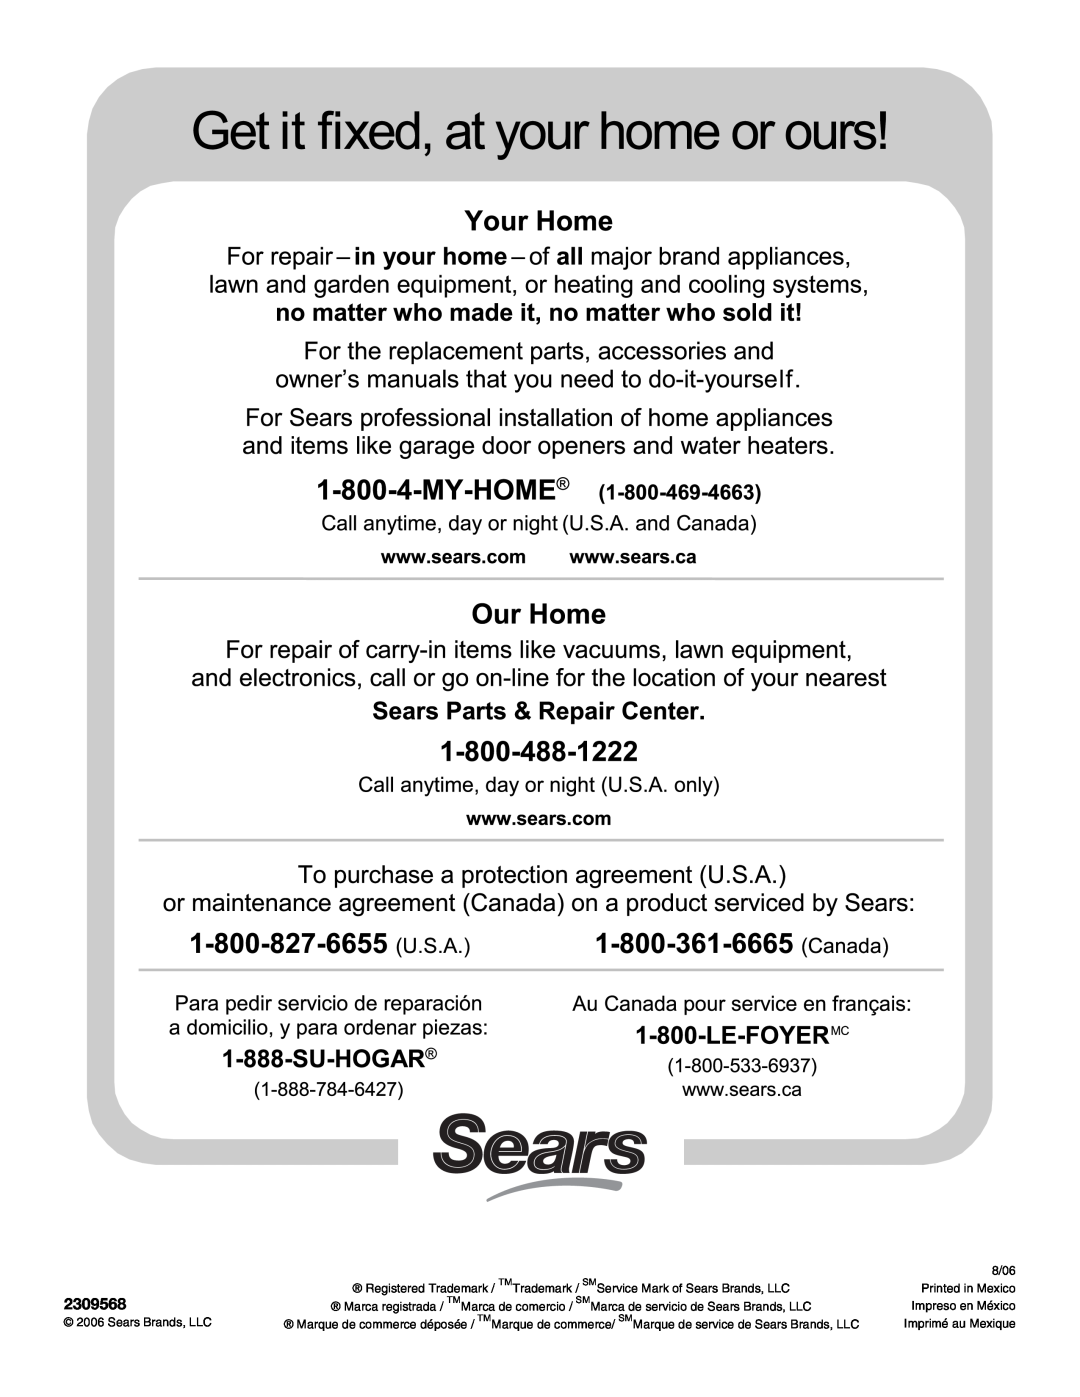 Sears T1KB2/T1RFKB2 manual 8/06, Printed in Mexico, Impreso en México, Sears Brands, LLC, Imprimé au Mexique 